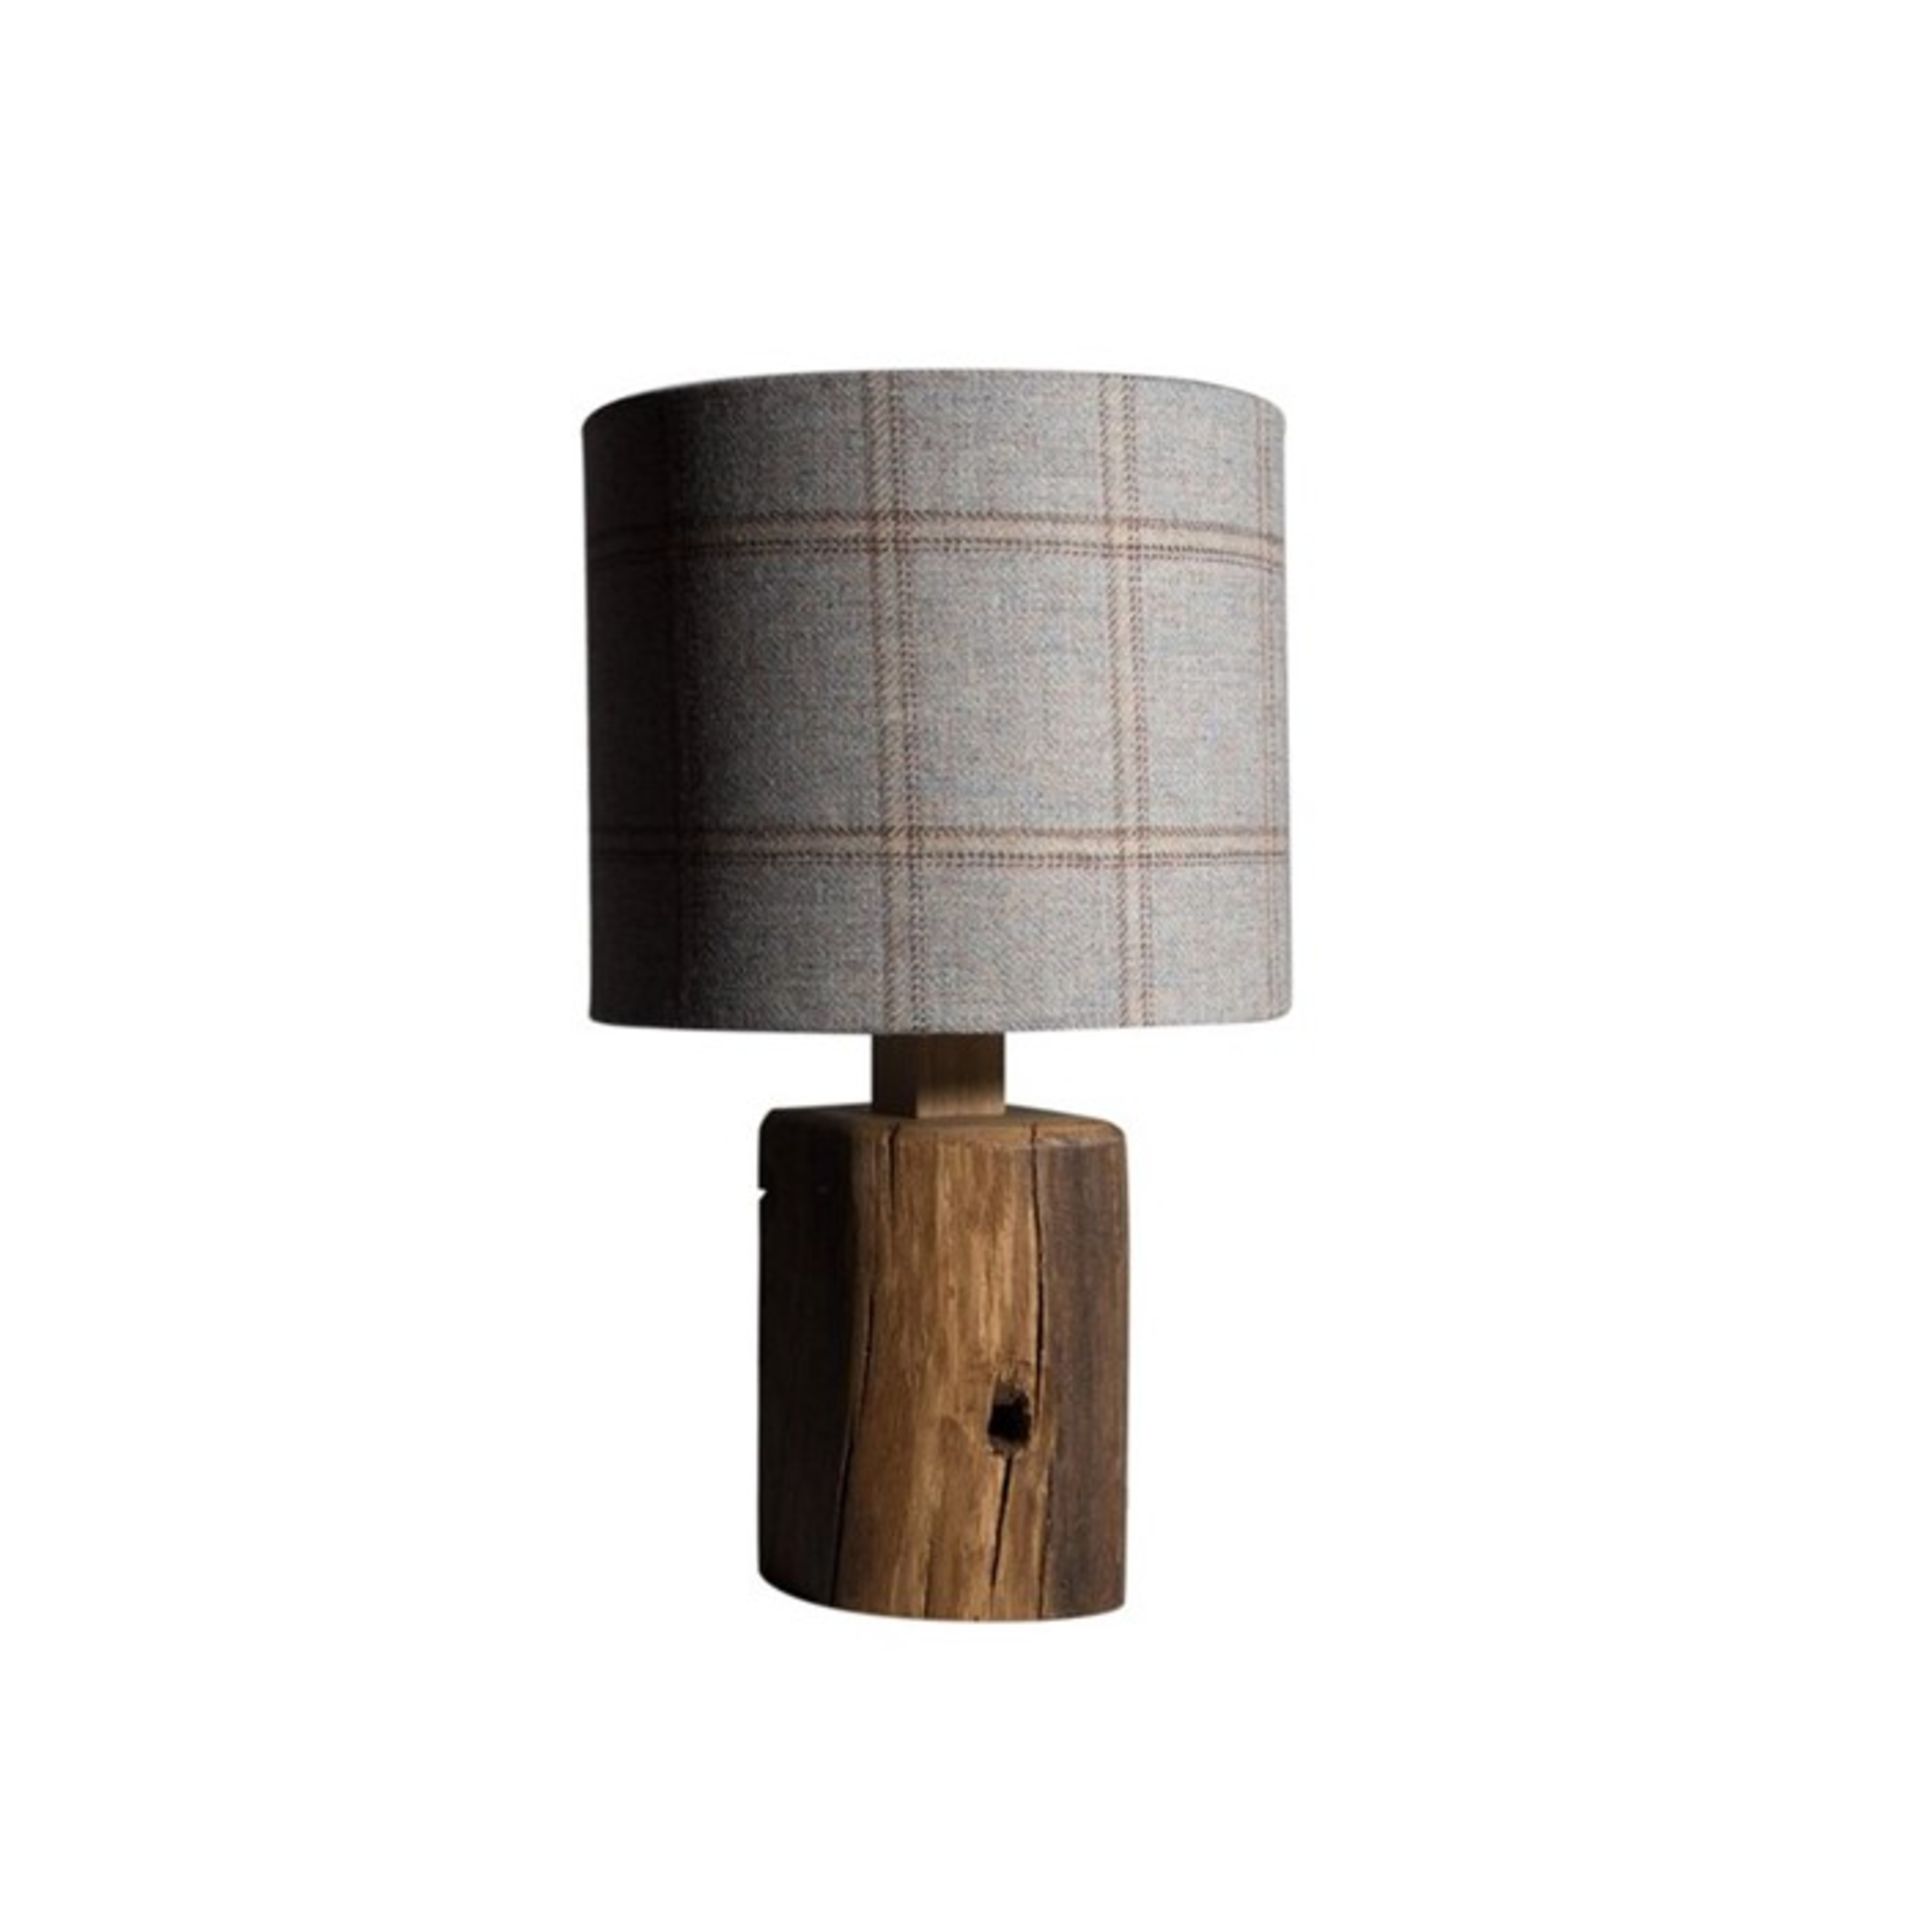 Tiffany Jayne Designs, 44.45cm Table Lamp - RRP £124 (TJDS1010#http://TJDS1010# - 12219/16) 2D